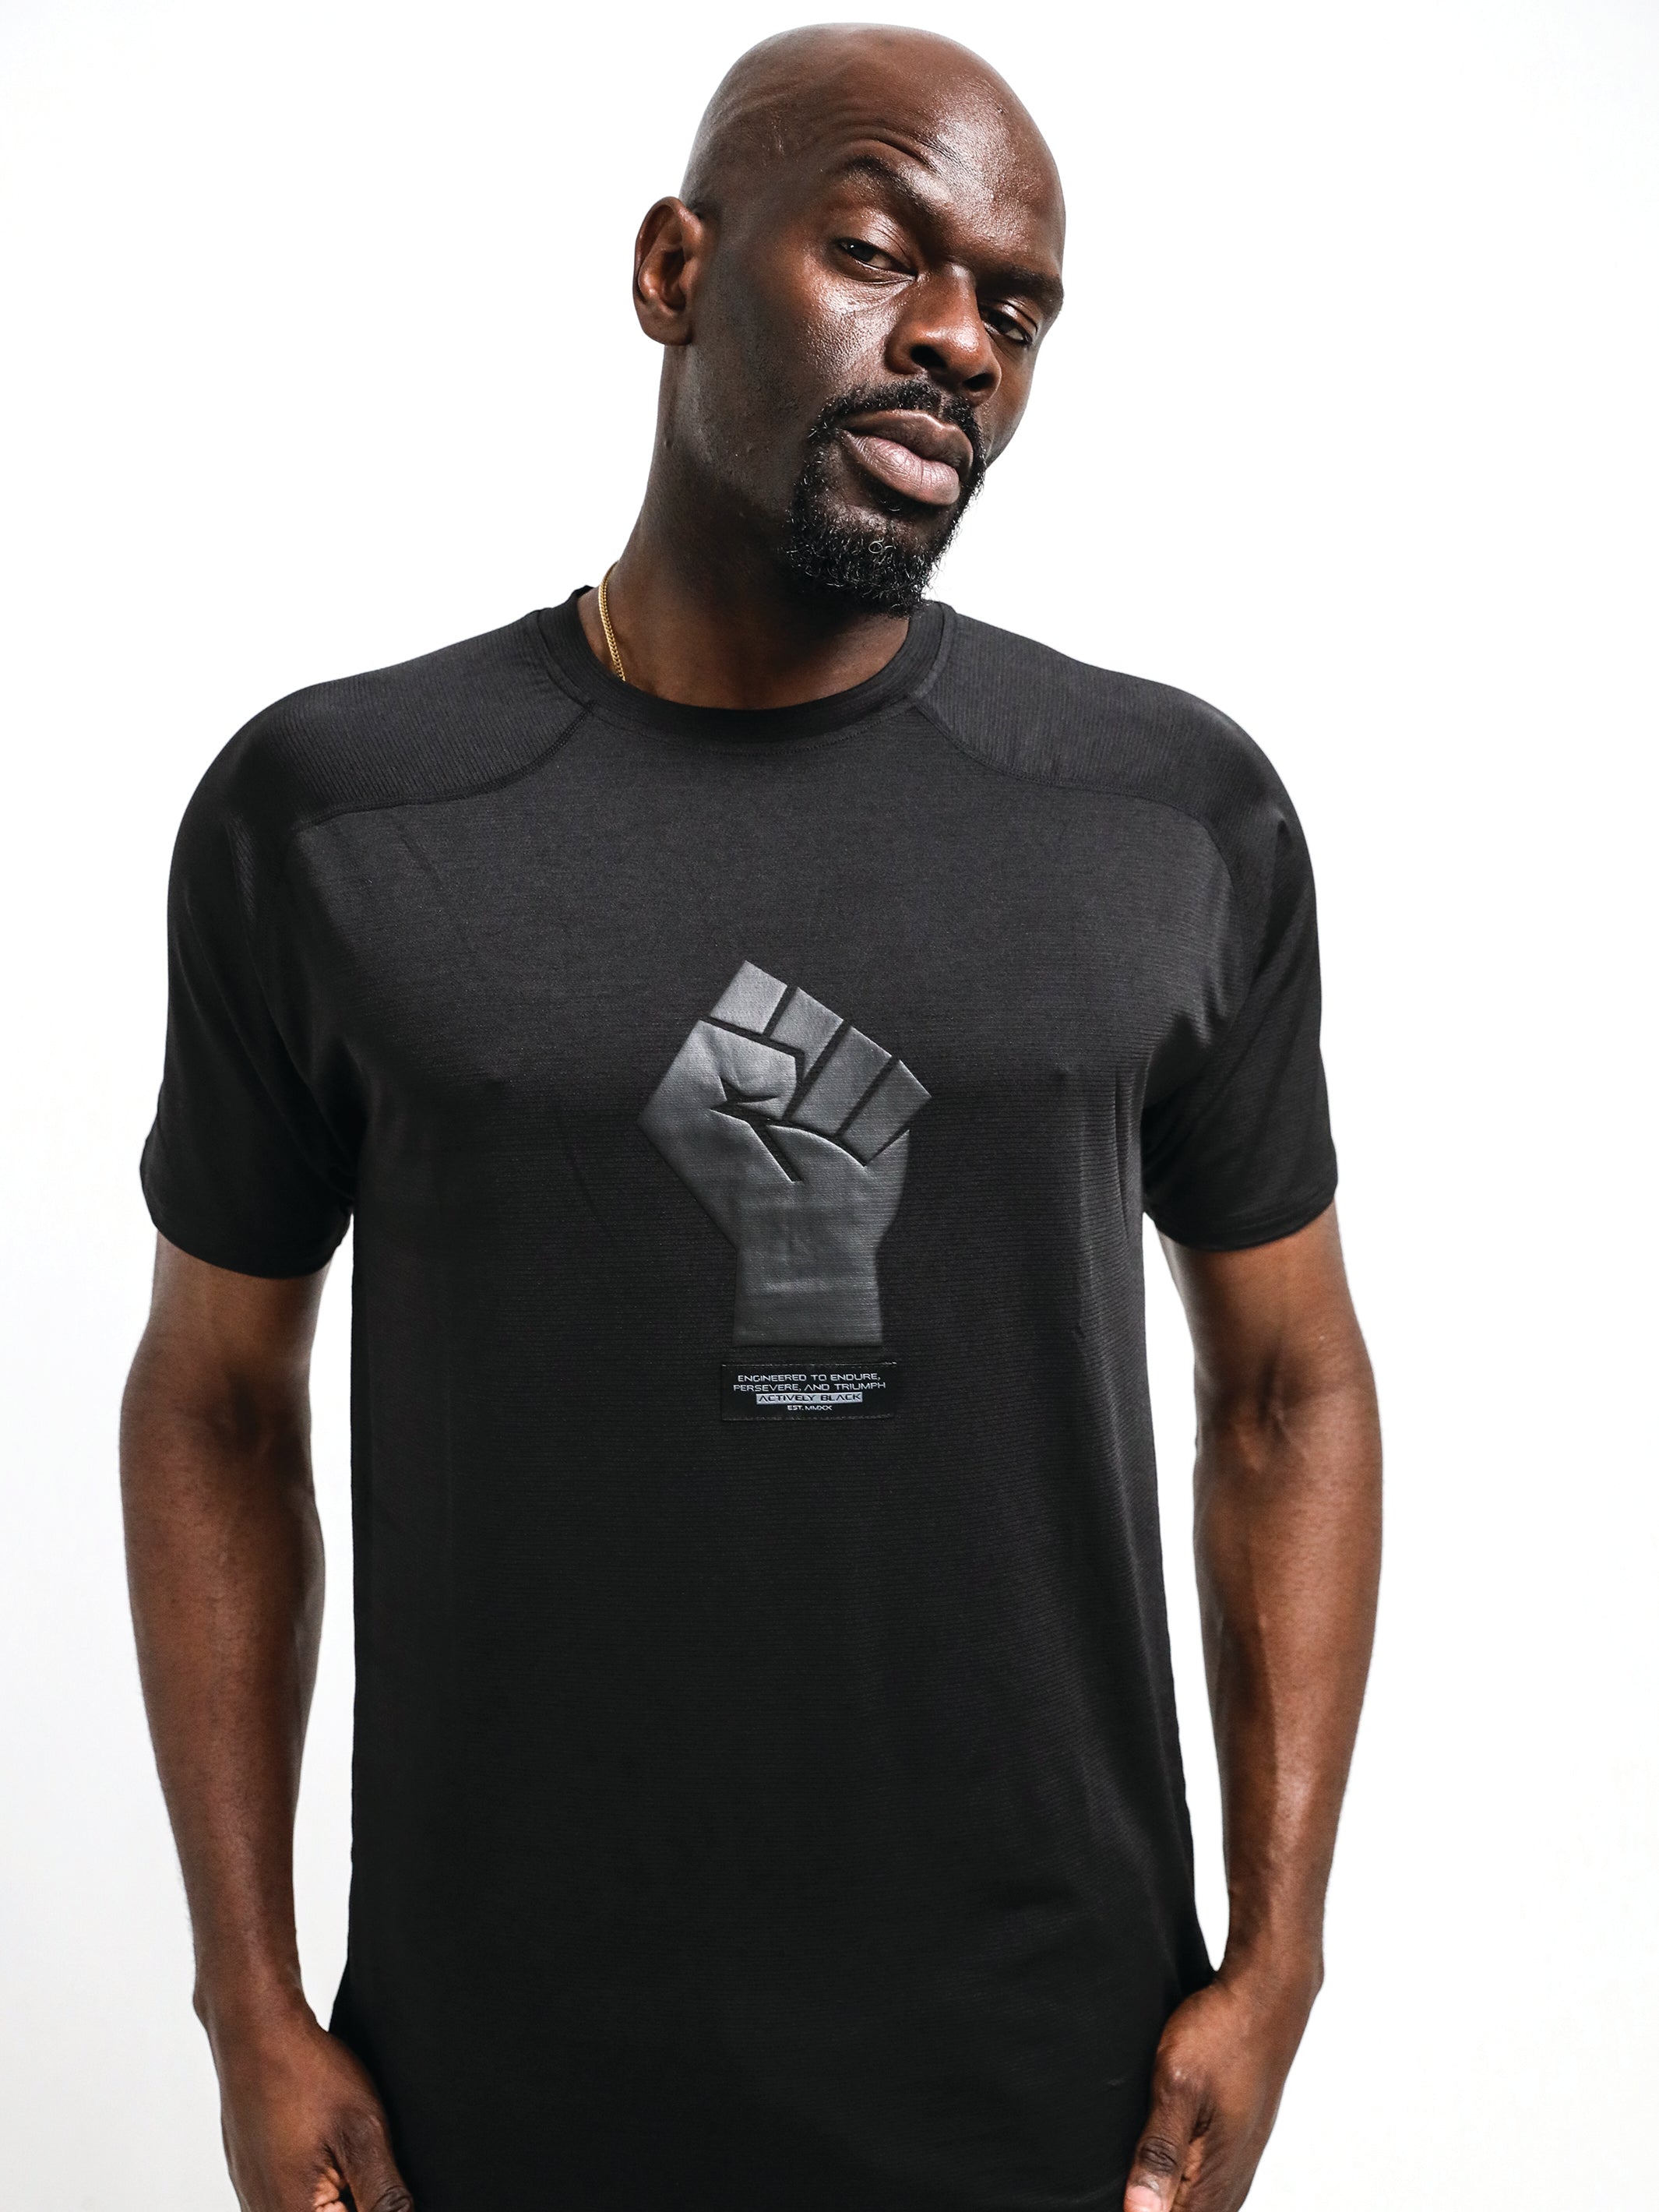 Men's Black Fist Performance Shirt